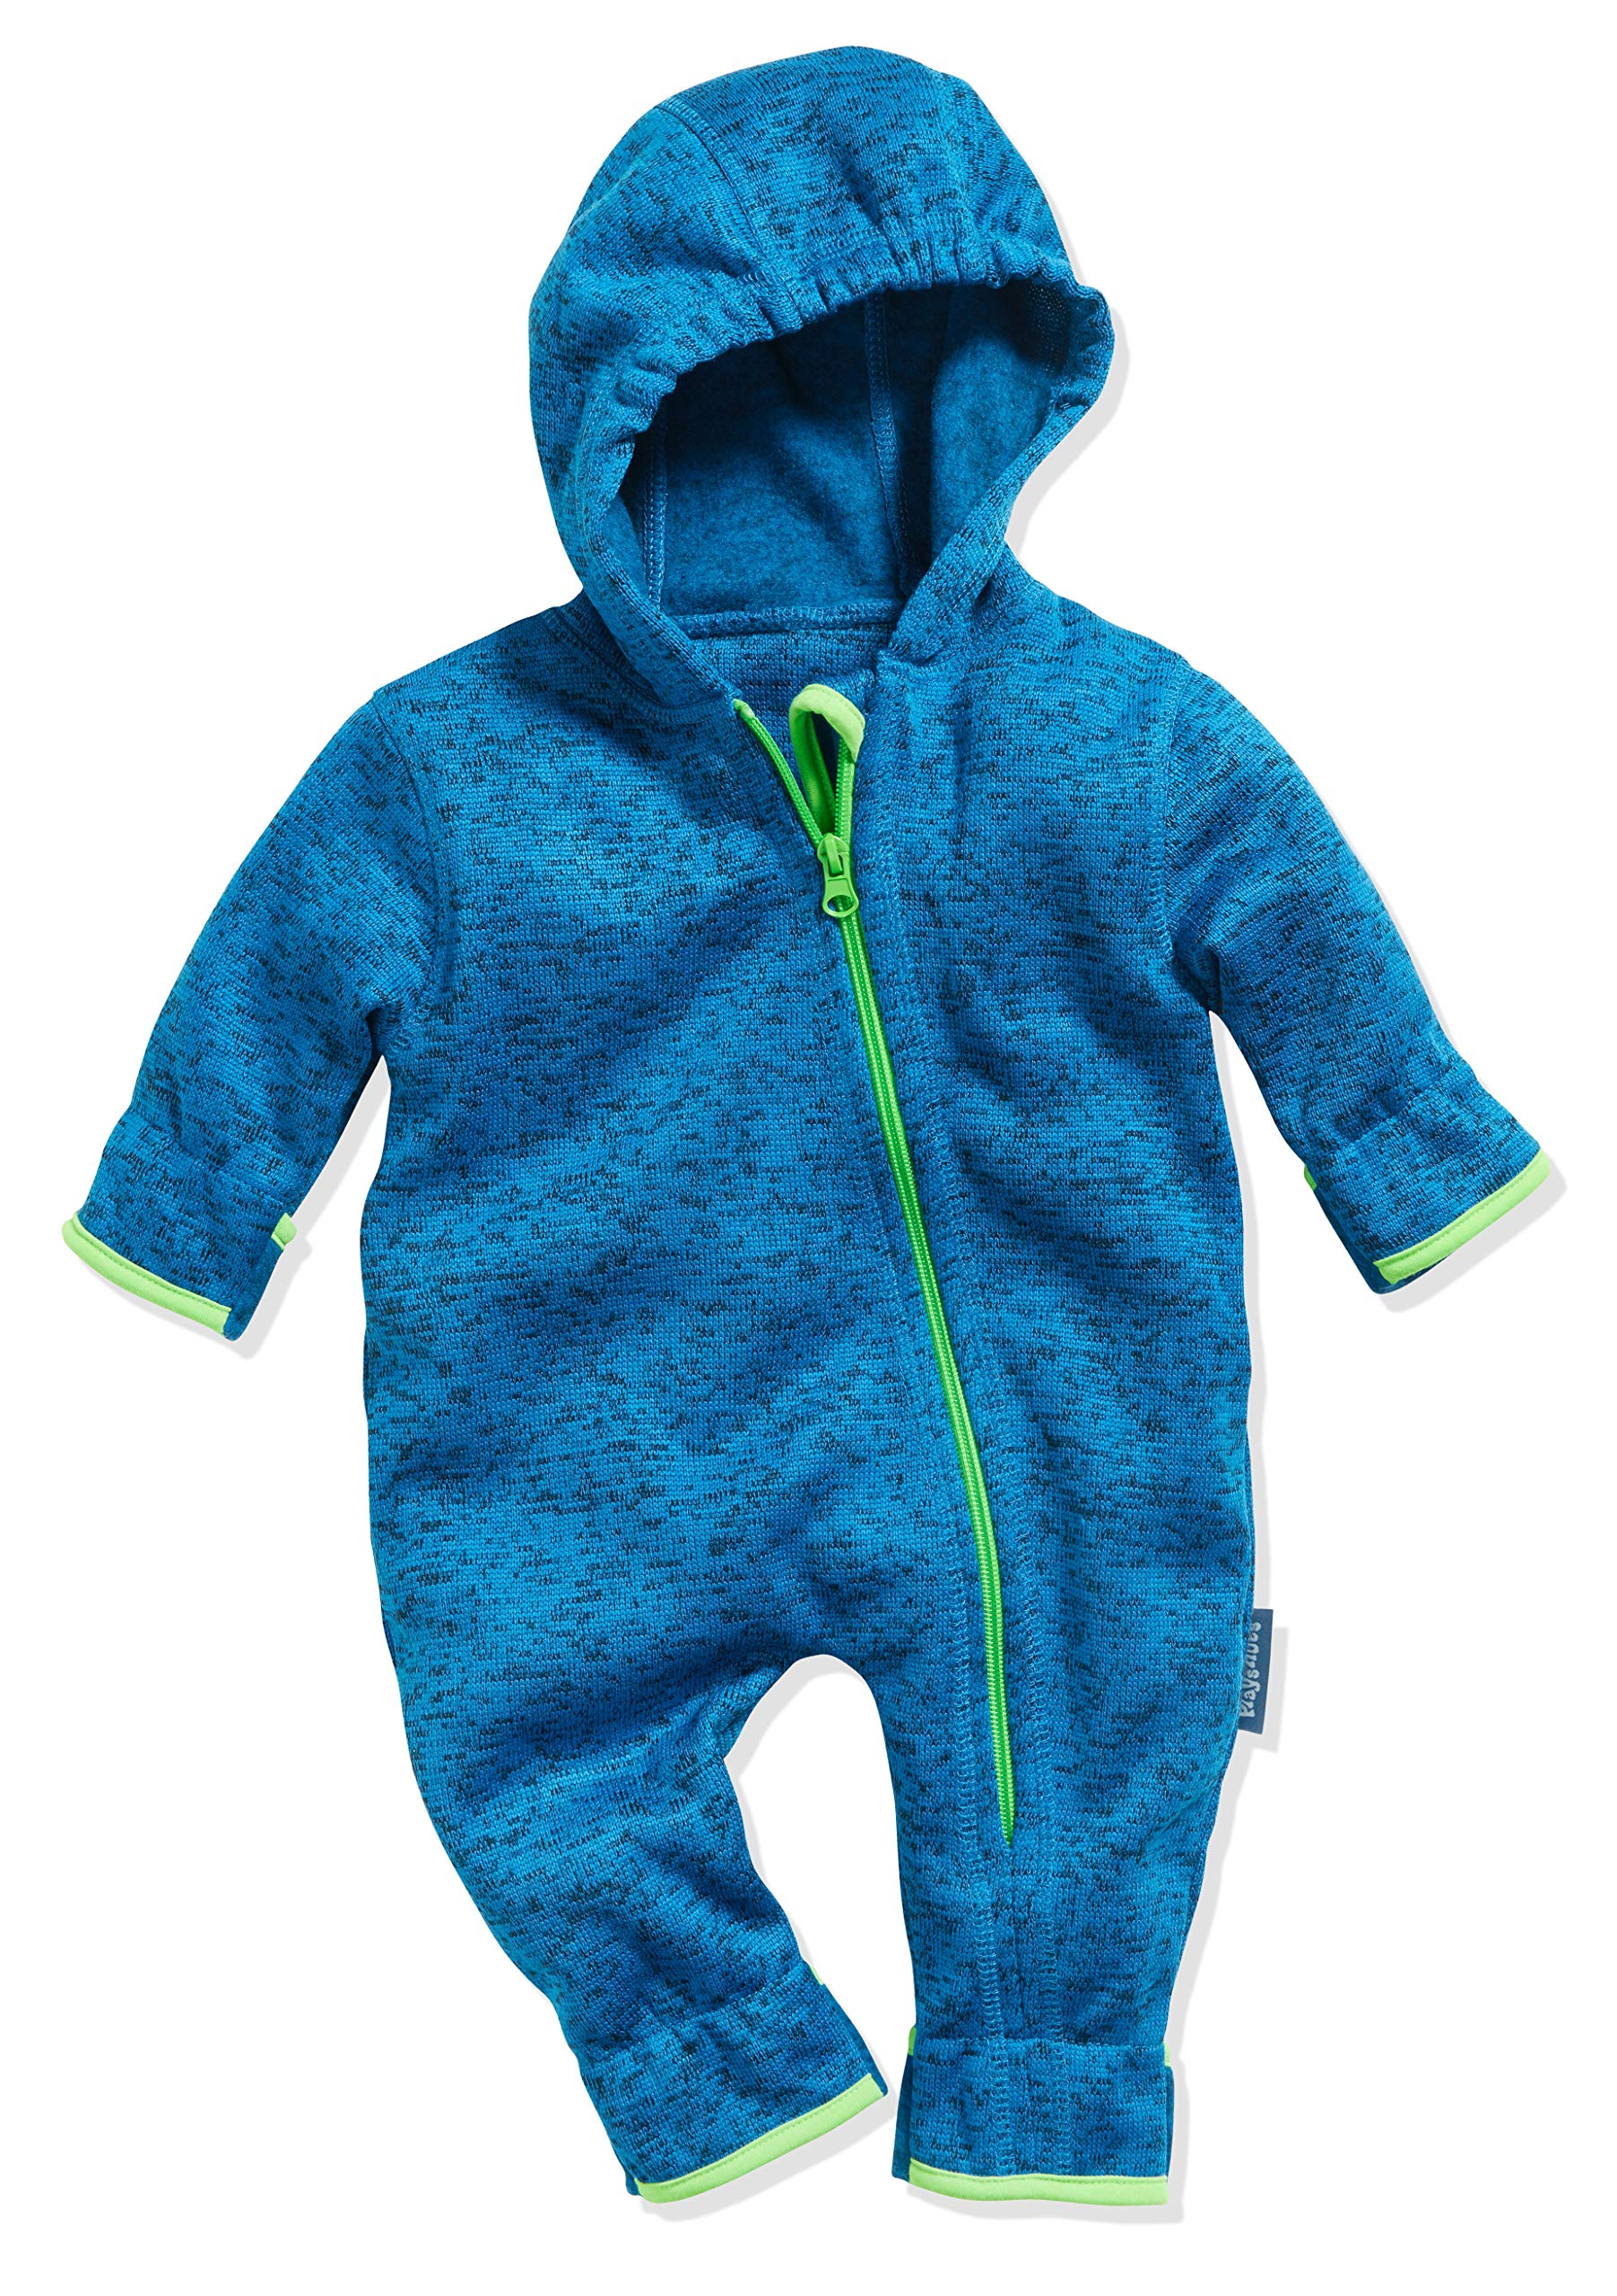 Playshoes Unisex Kinder Fleece-Overall Jumpsuit, blau Strickfleece, 74